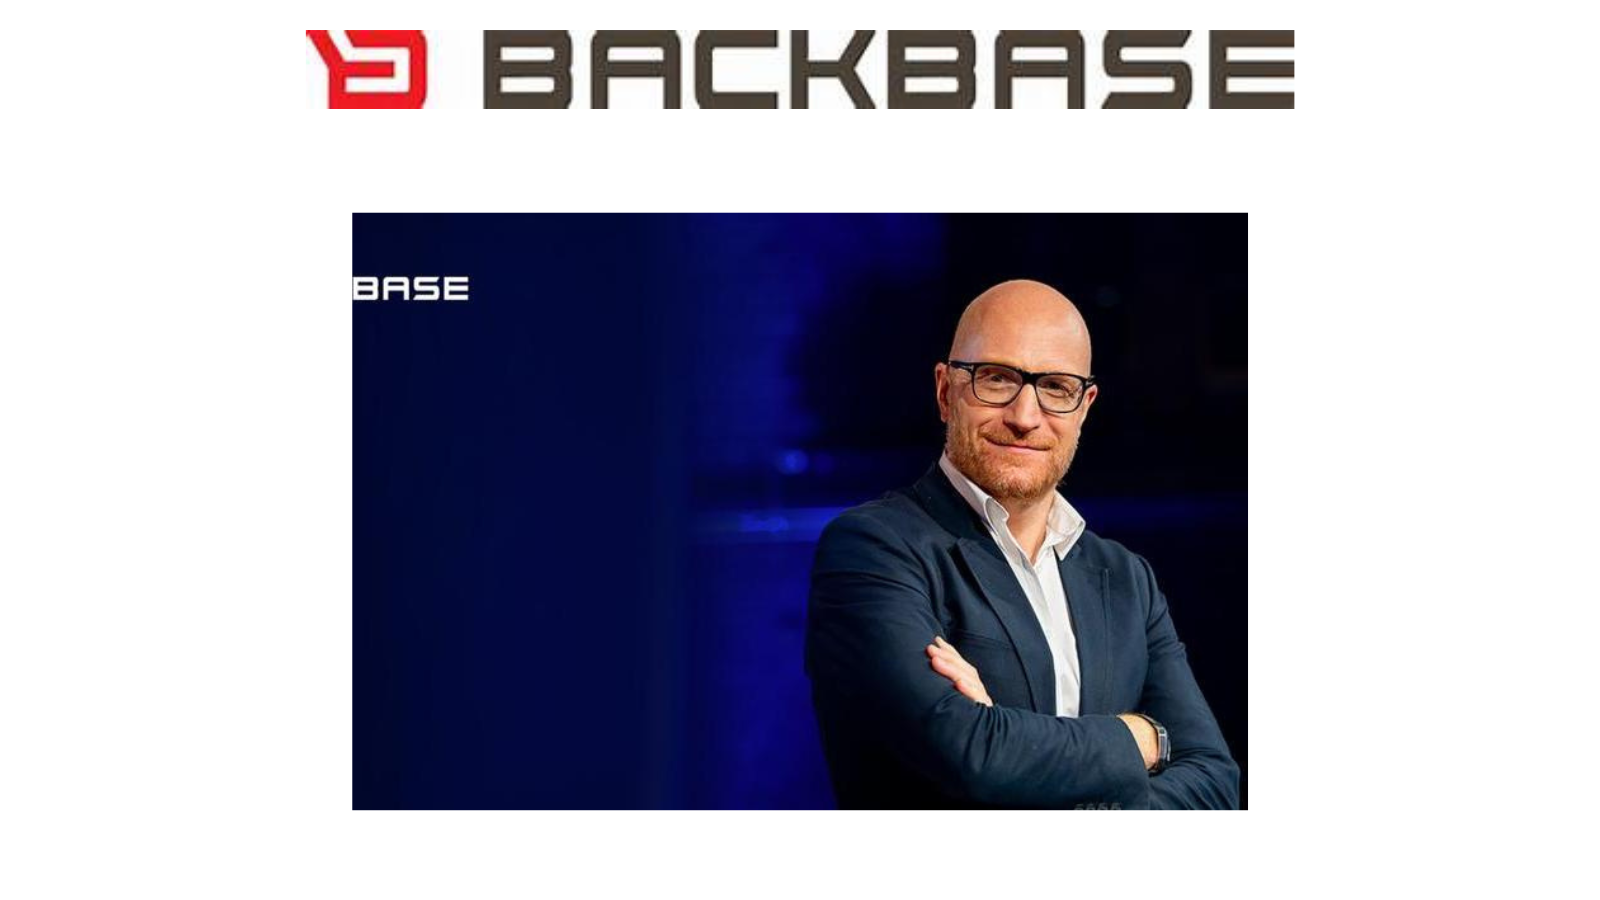 Backbase Logo and Jouk Pleiter, Founder and CEO of Backbase